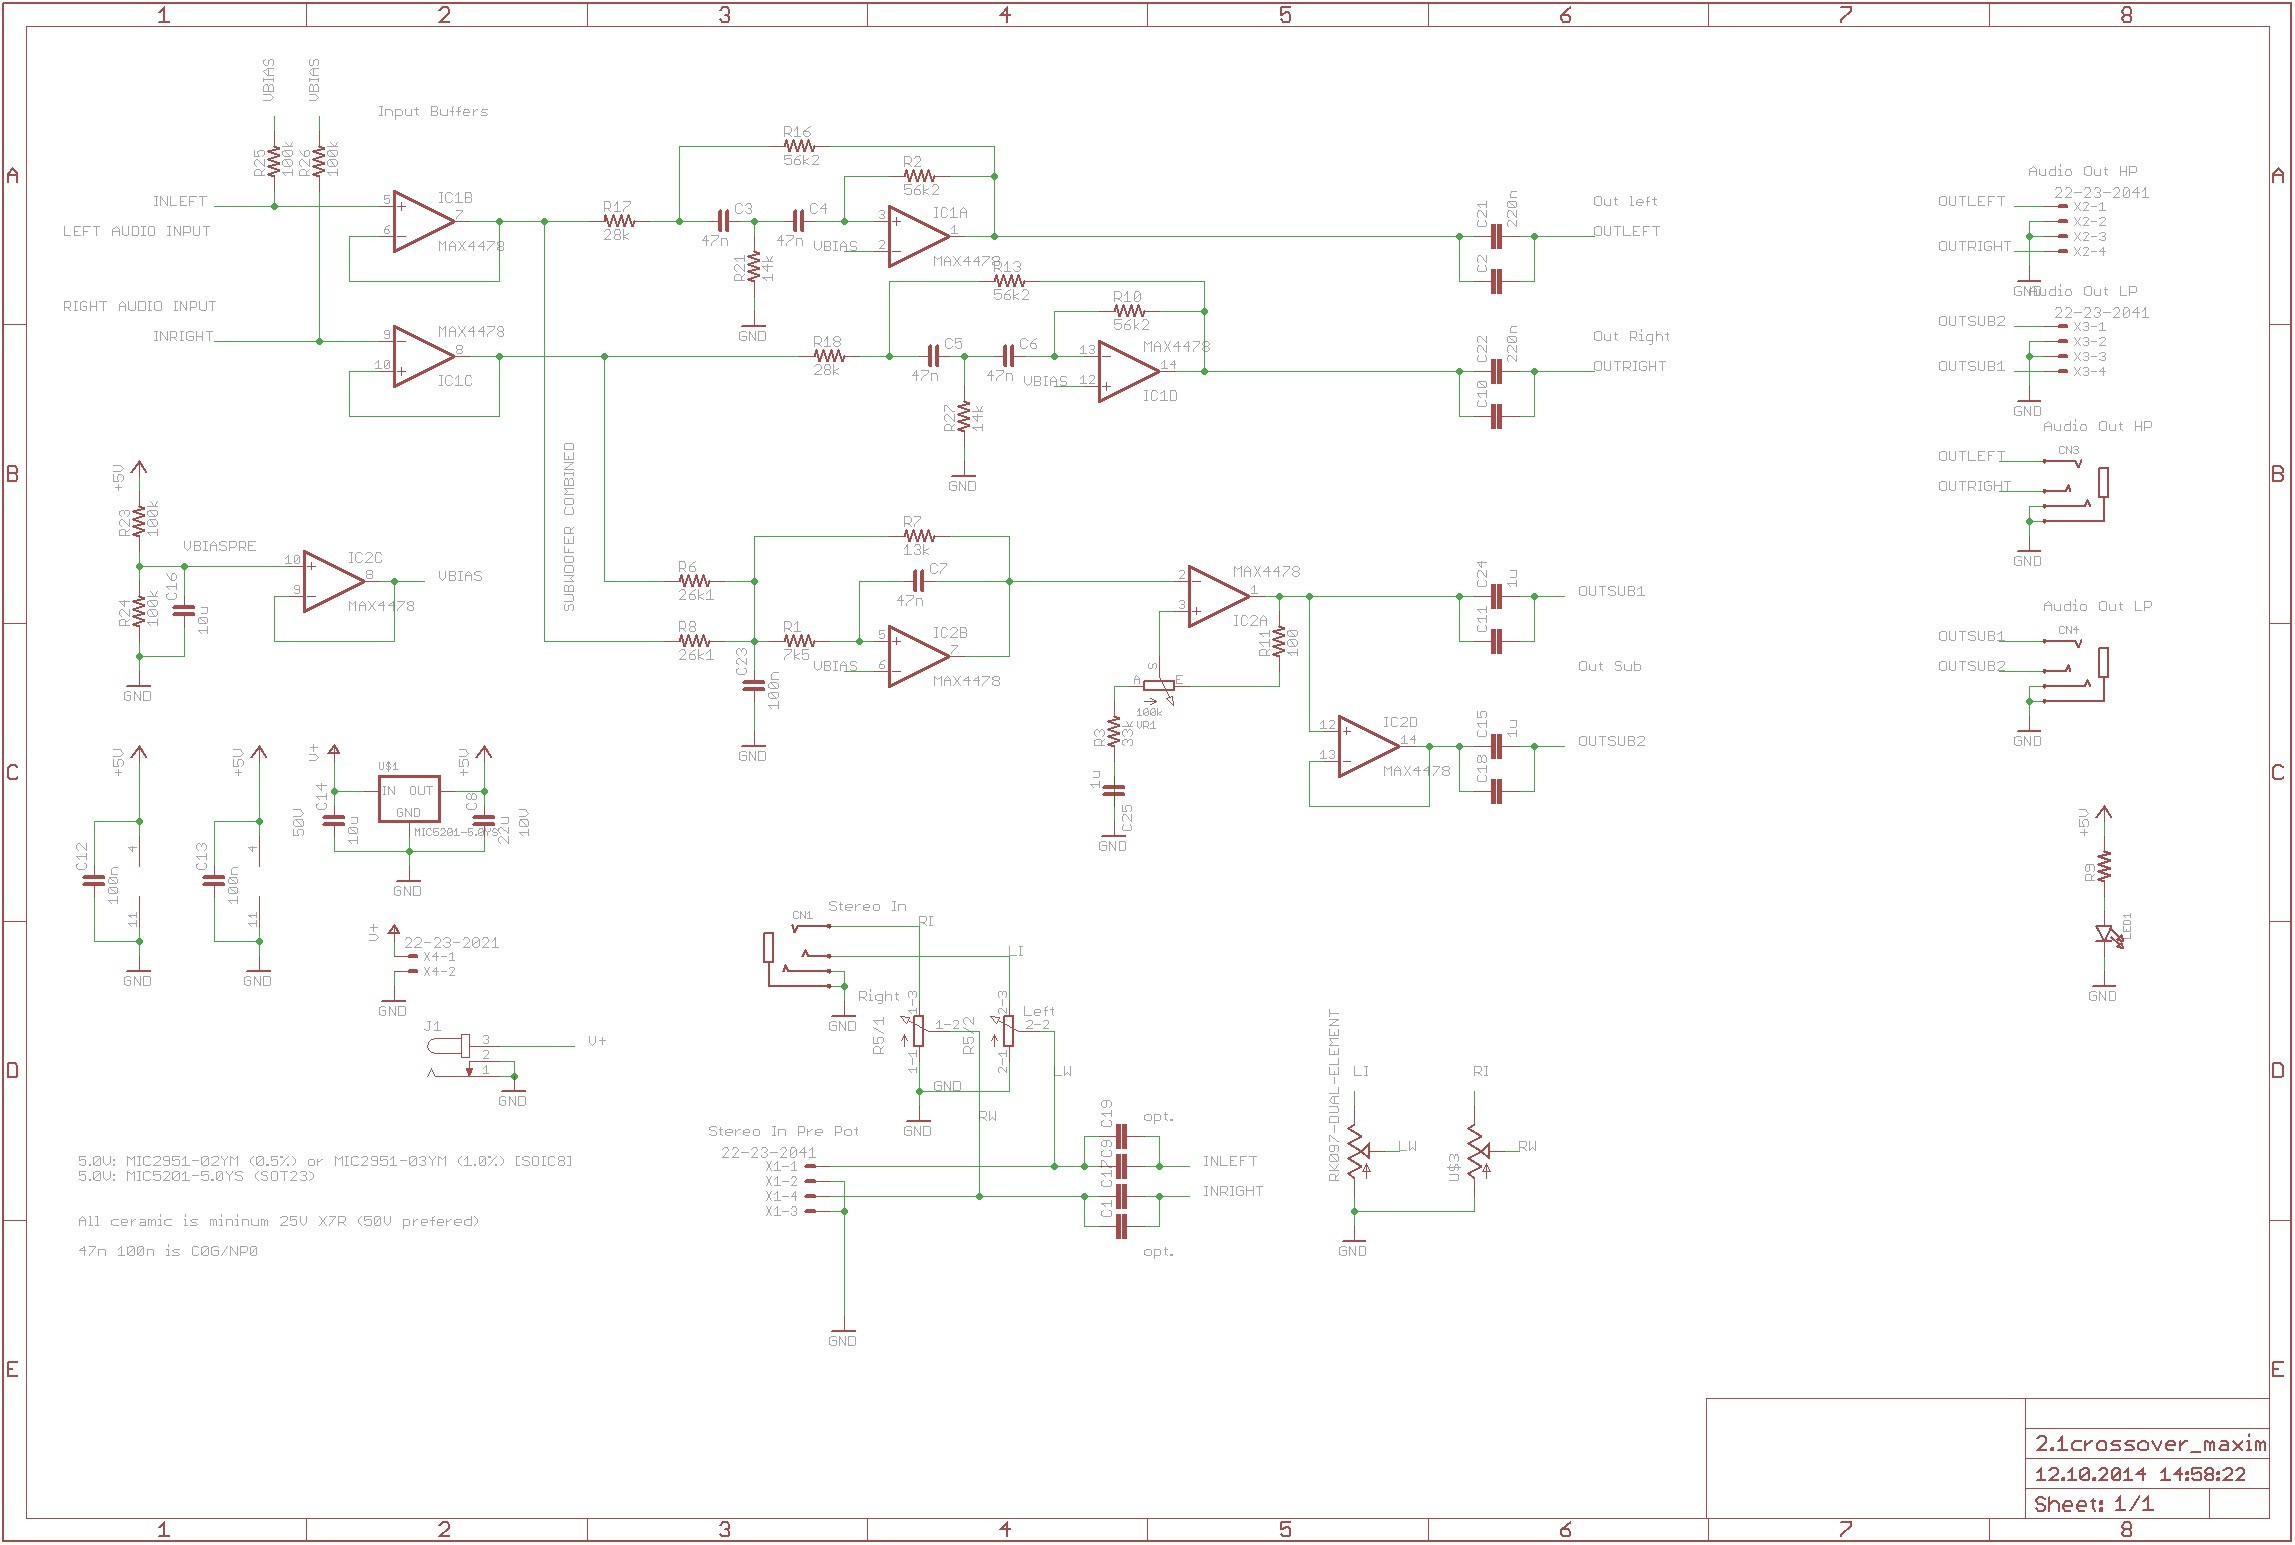 Wiring Diagram Program Aktive Crossoverfrequenzweiche Mit Max4478 360customs Crossover Schematic Rev 0d Wiring Lighting Circuit